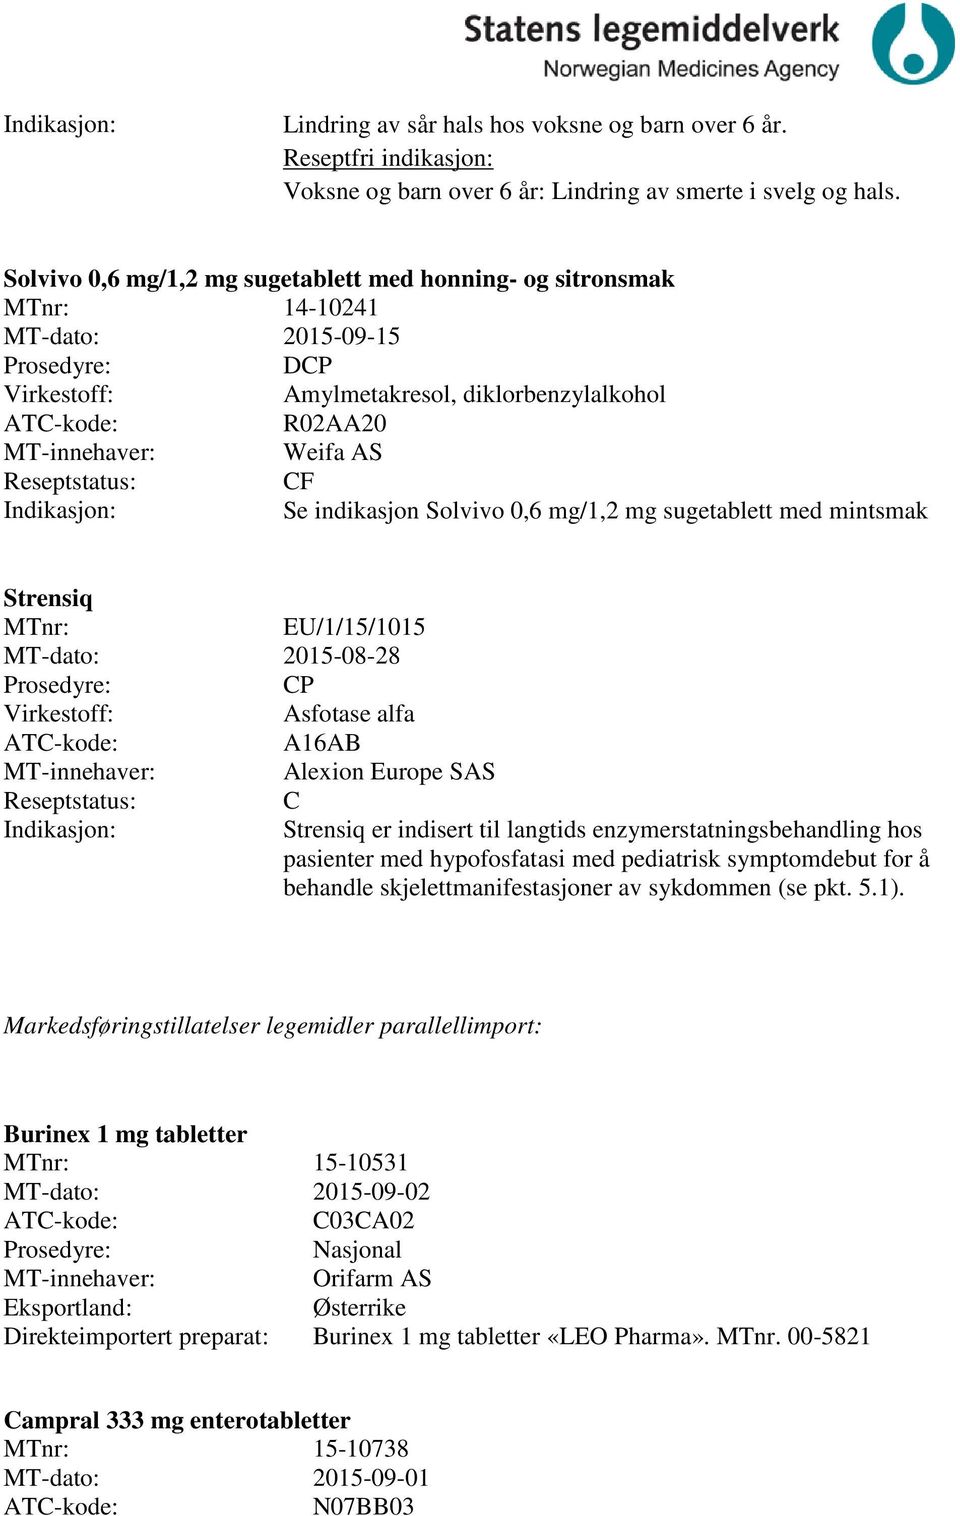 mintsmak Strensiq EU/1/15/1015 MT-dato: 2015-08-28 P Asfotase alfa A16AB Alexion Europe SAS Strensiq er indisert til langtids enzymerstatningsbehandling hos pasienter med hypofosfatasi med pediatrisk